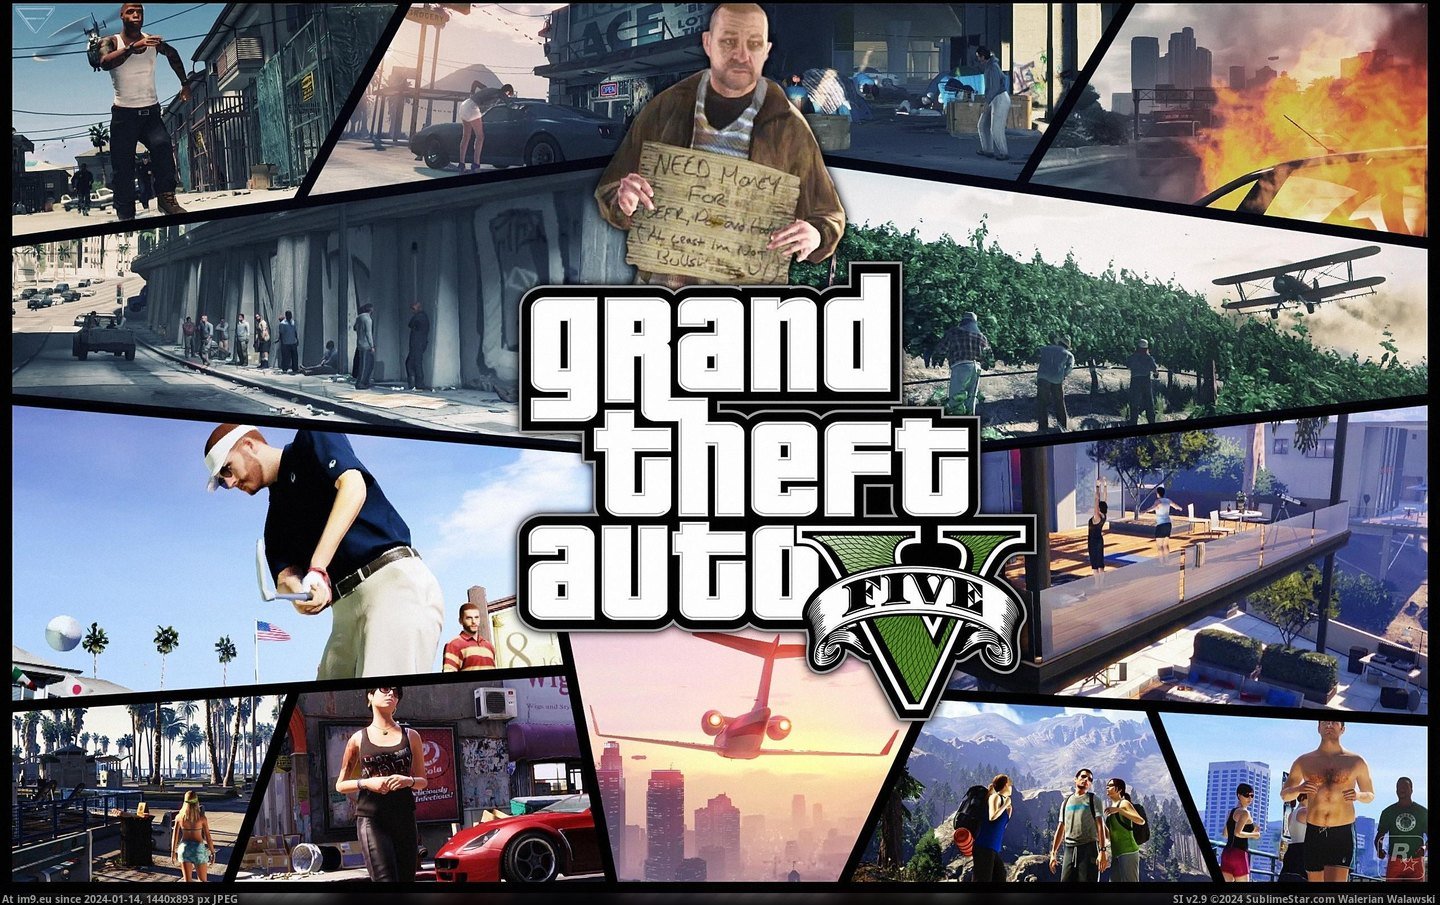 #Wallpaper #Wide #Theft #Grand #Auto Grand Theft Auto 5 Wide HD Wallpaper Pic. (Изображение из альбом Unique HD Wallpapers))